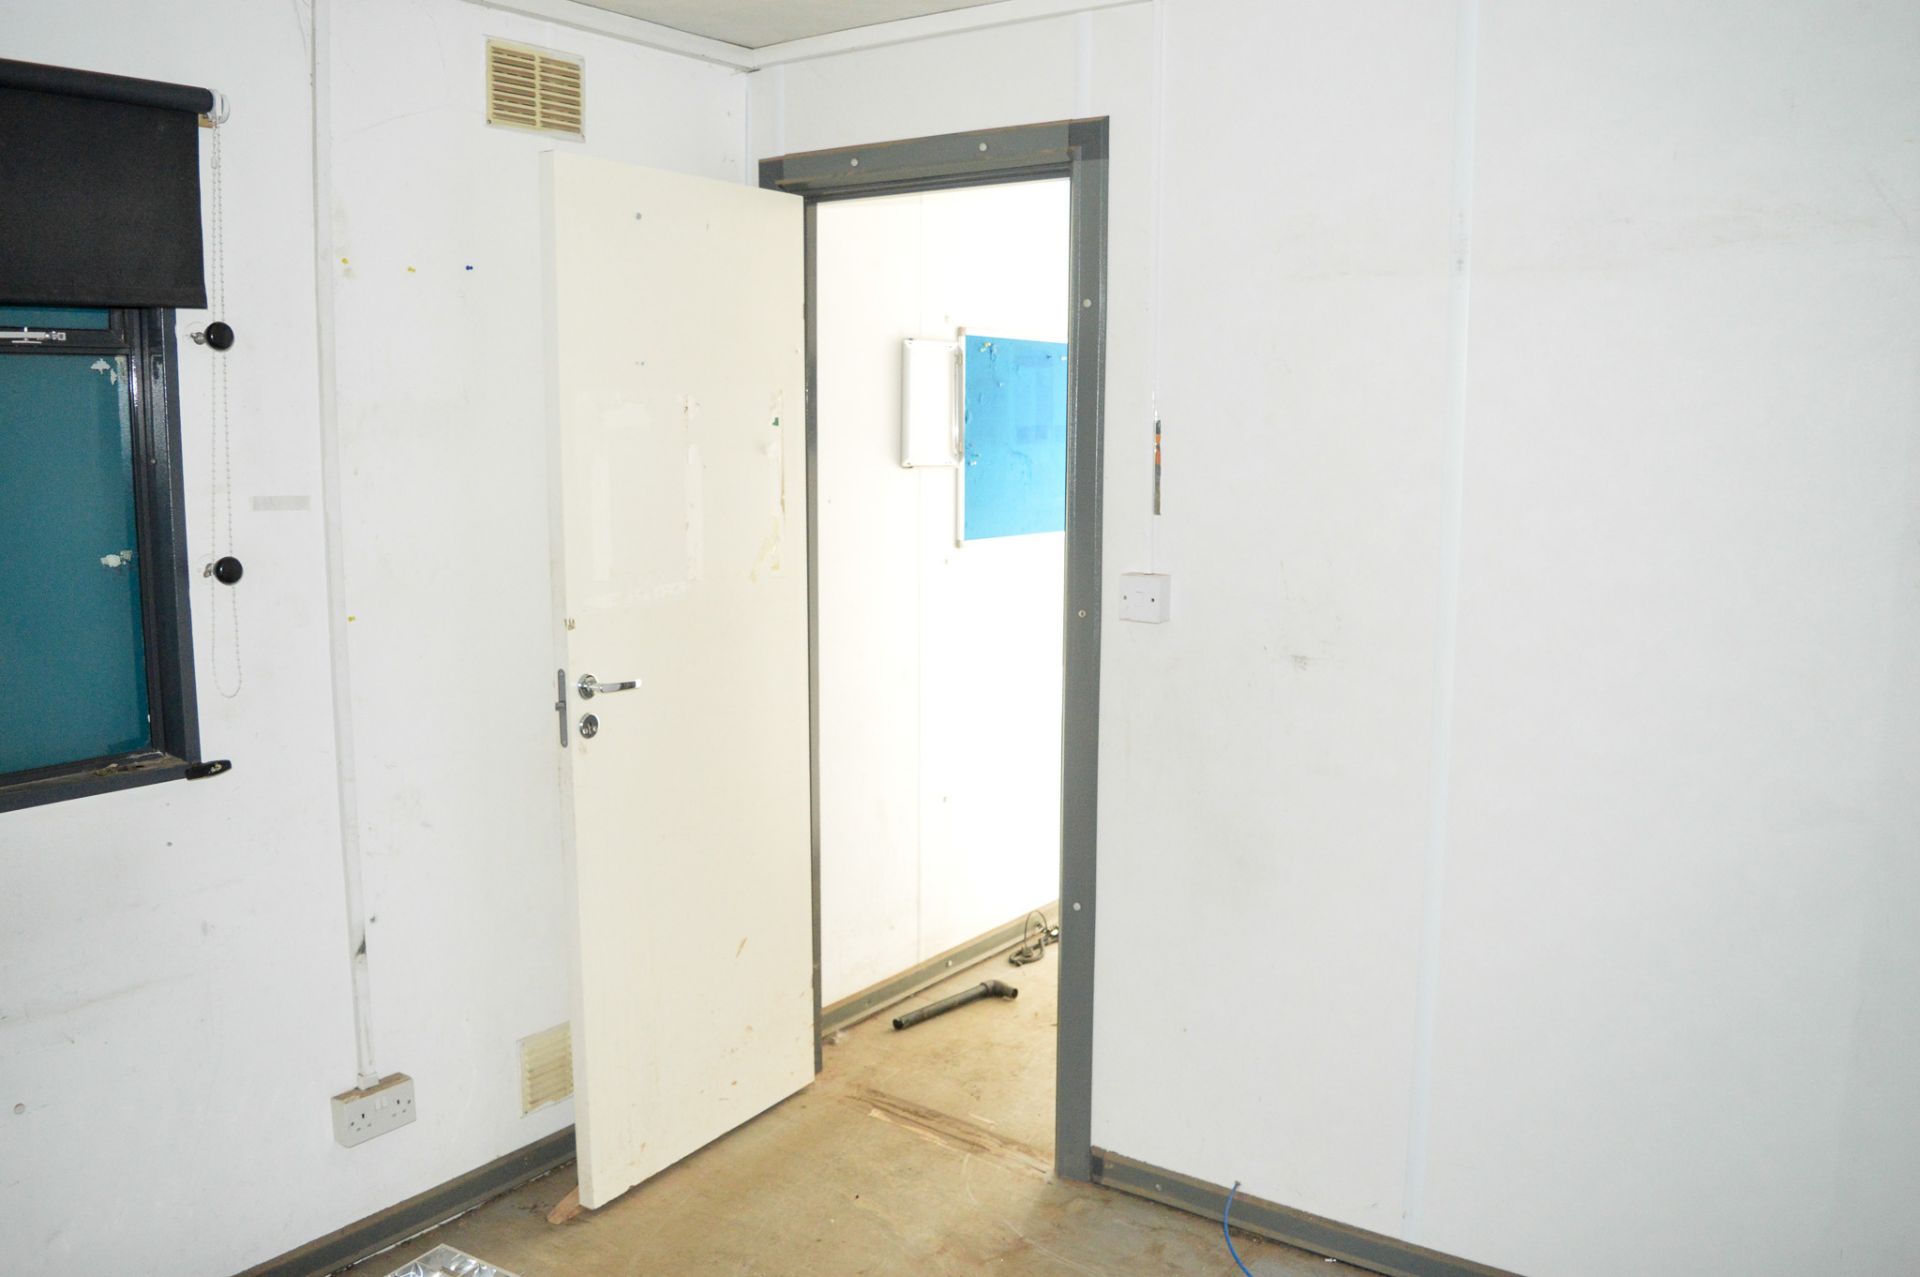 32 ft x 10 ft steel anti vandal jack leg site office unit cpmprising of: 2 offices, kitchen & toilet - Image 7 of 12